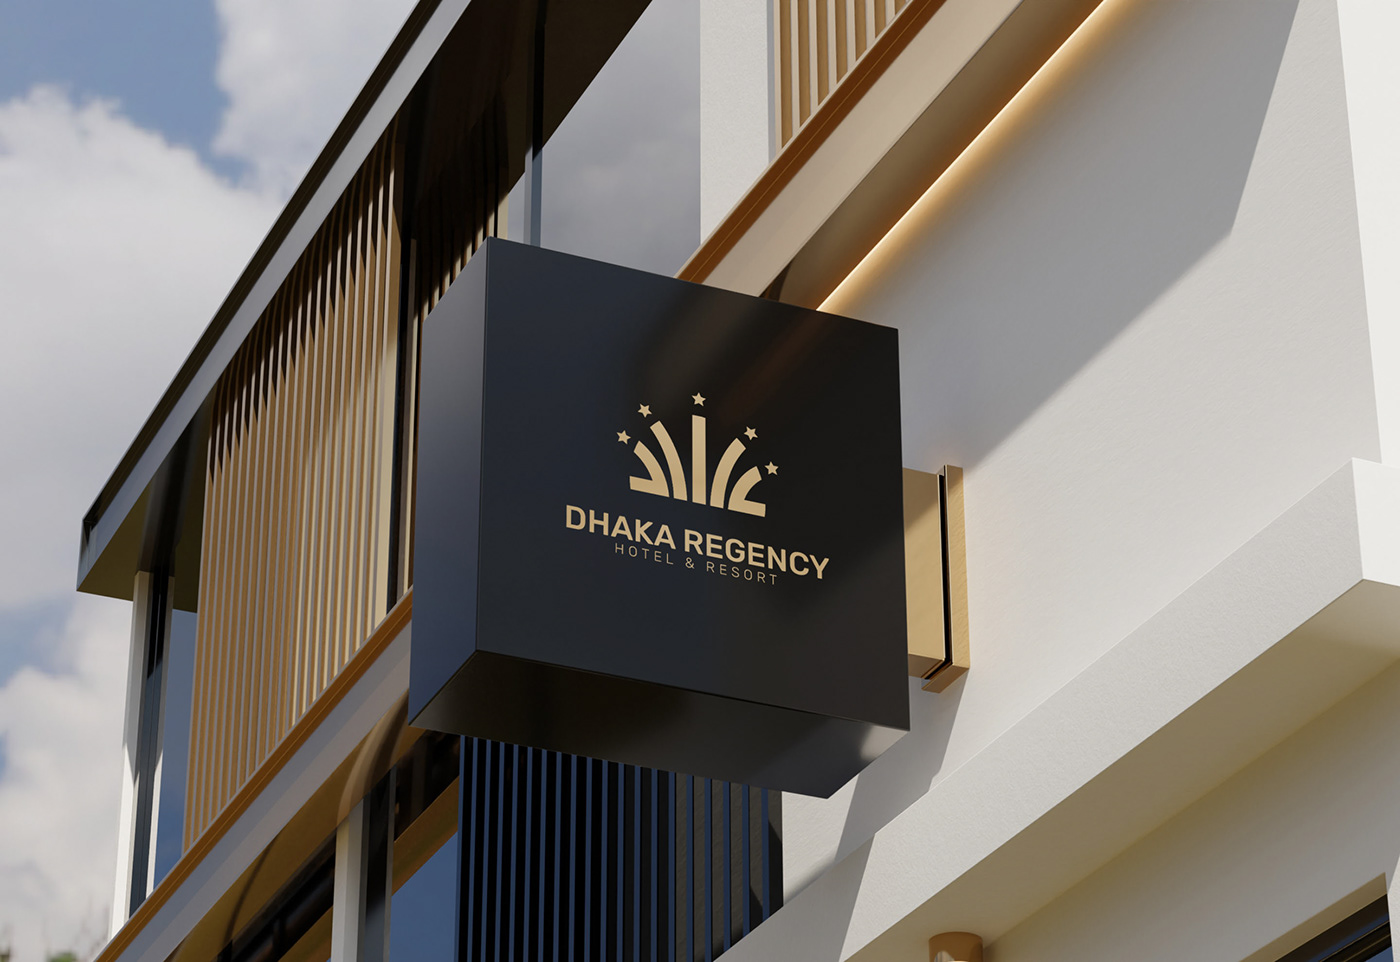 logo revamping hotel Booking resort UI/UX Design luxury aesthetic rebranding ILLUSTRATION 